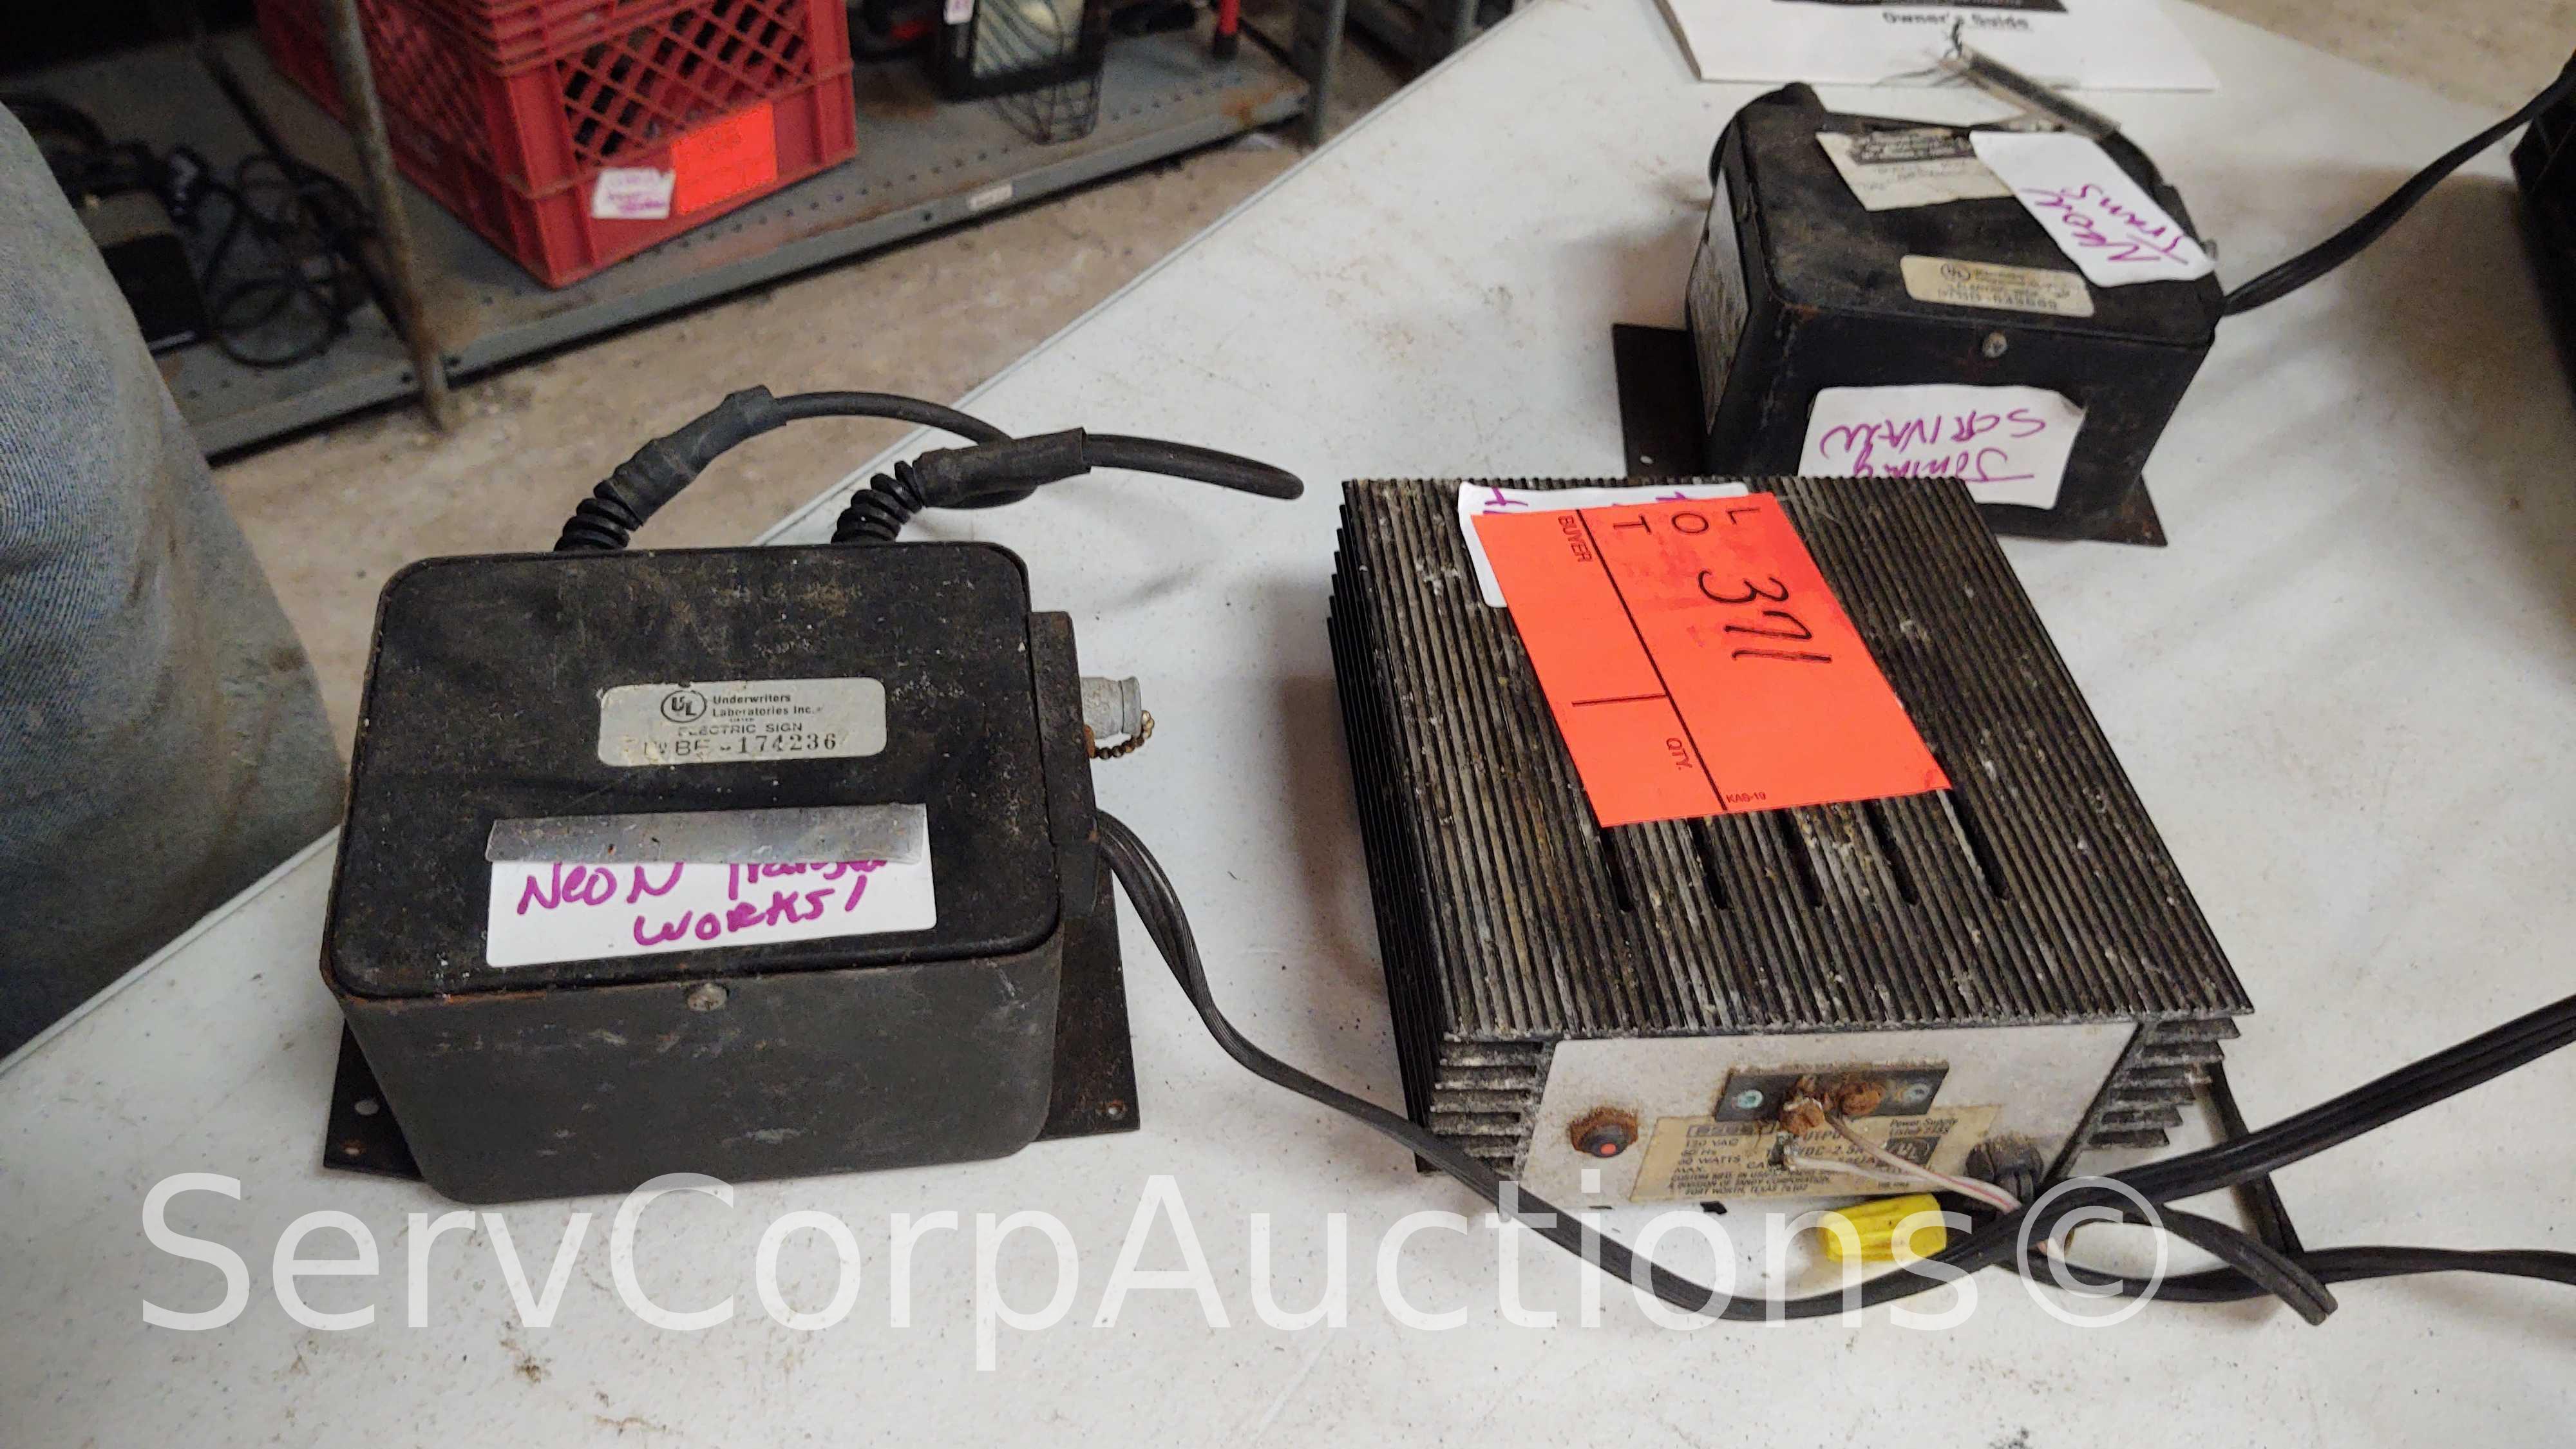 Lot on Shelf of Micronta 12-Volt Regulated Power | Proxibid